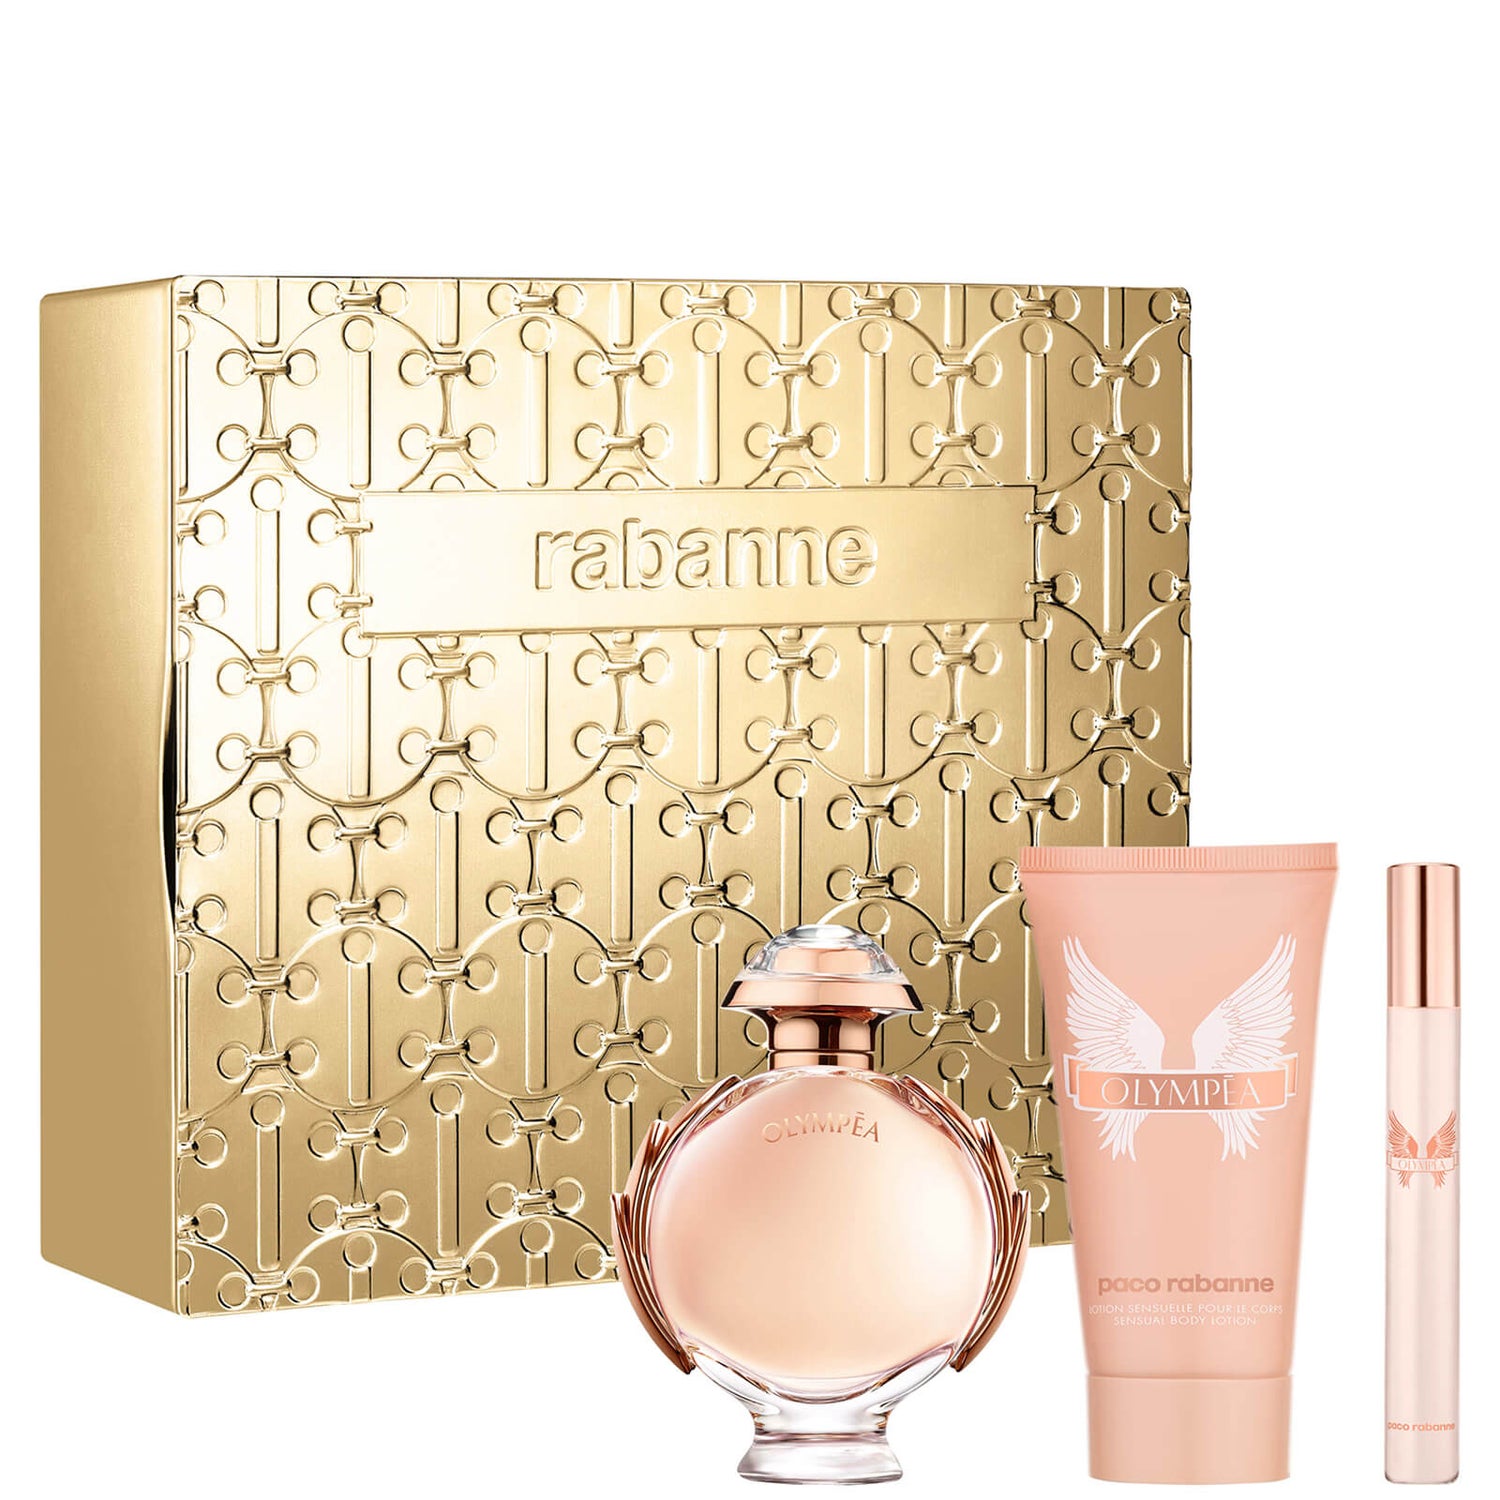 Paco Rabanne Olympea Eau de Parfum 50ml Gift Set (Worth £105.60)